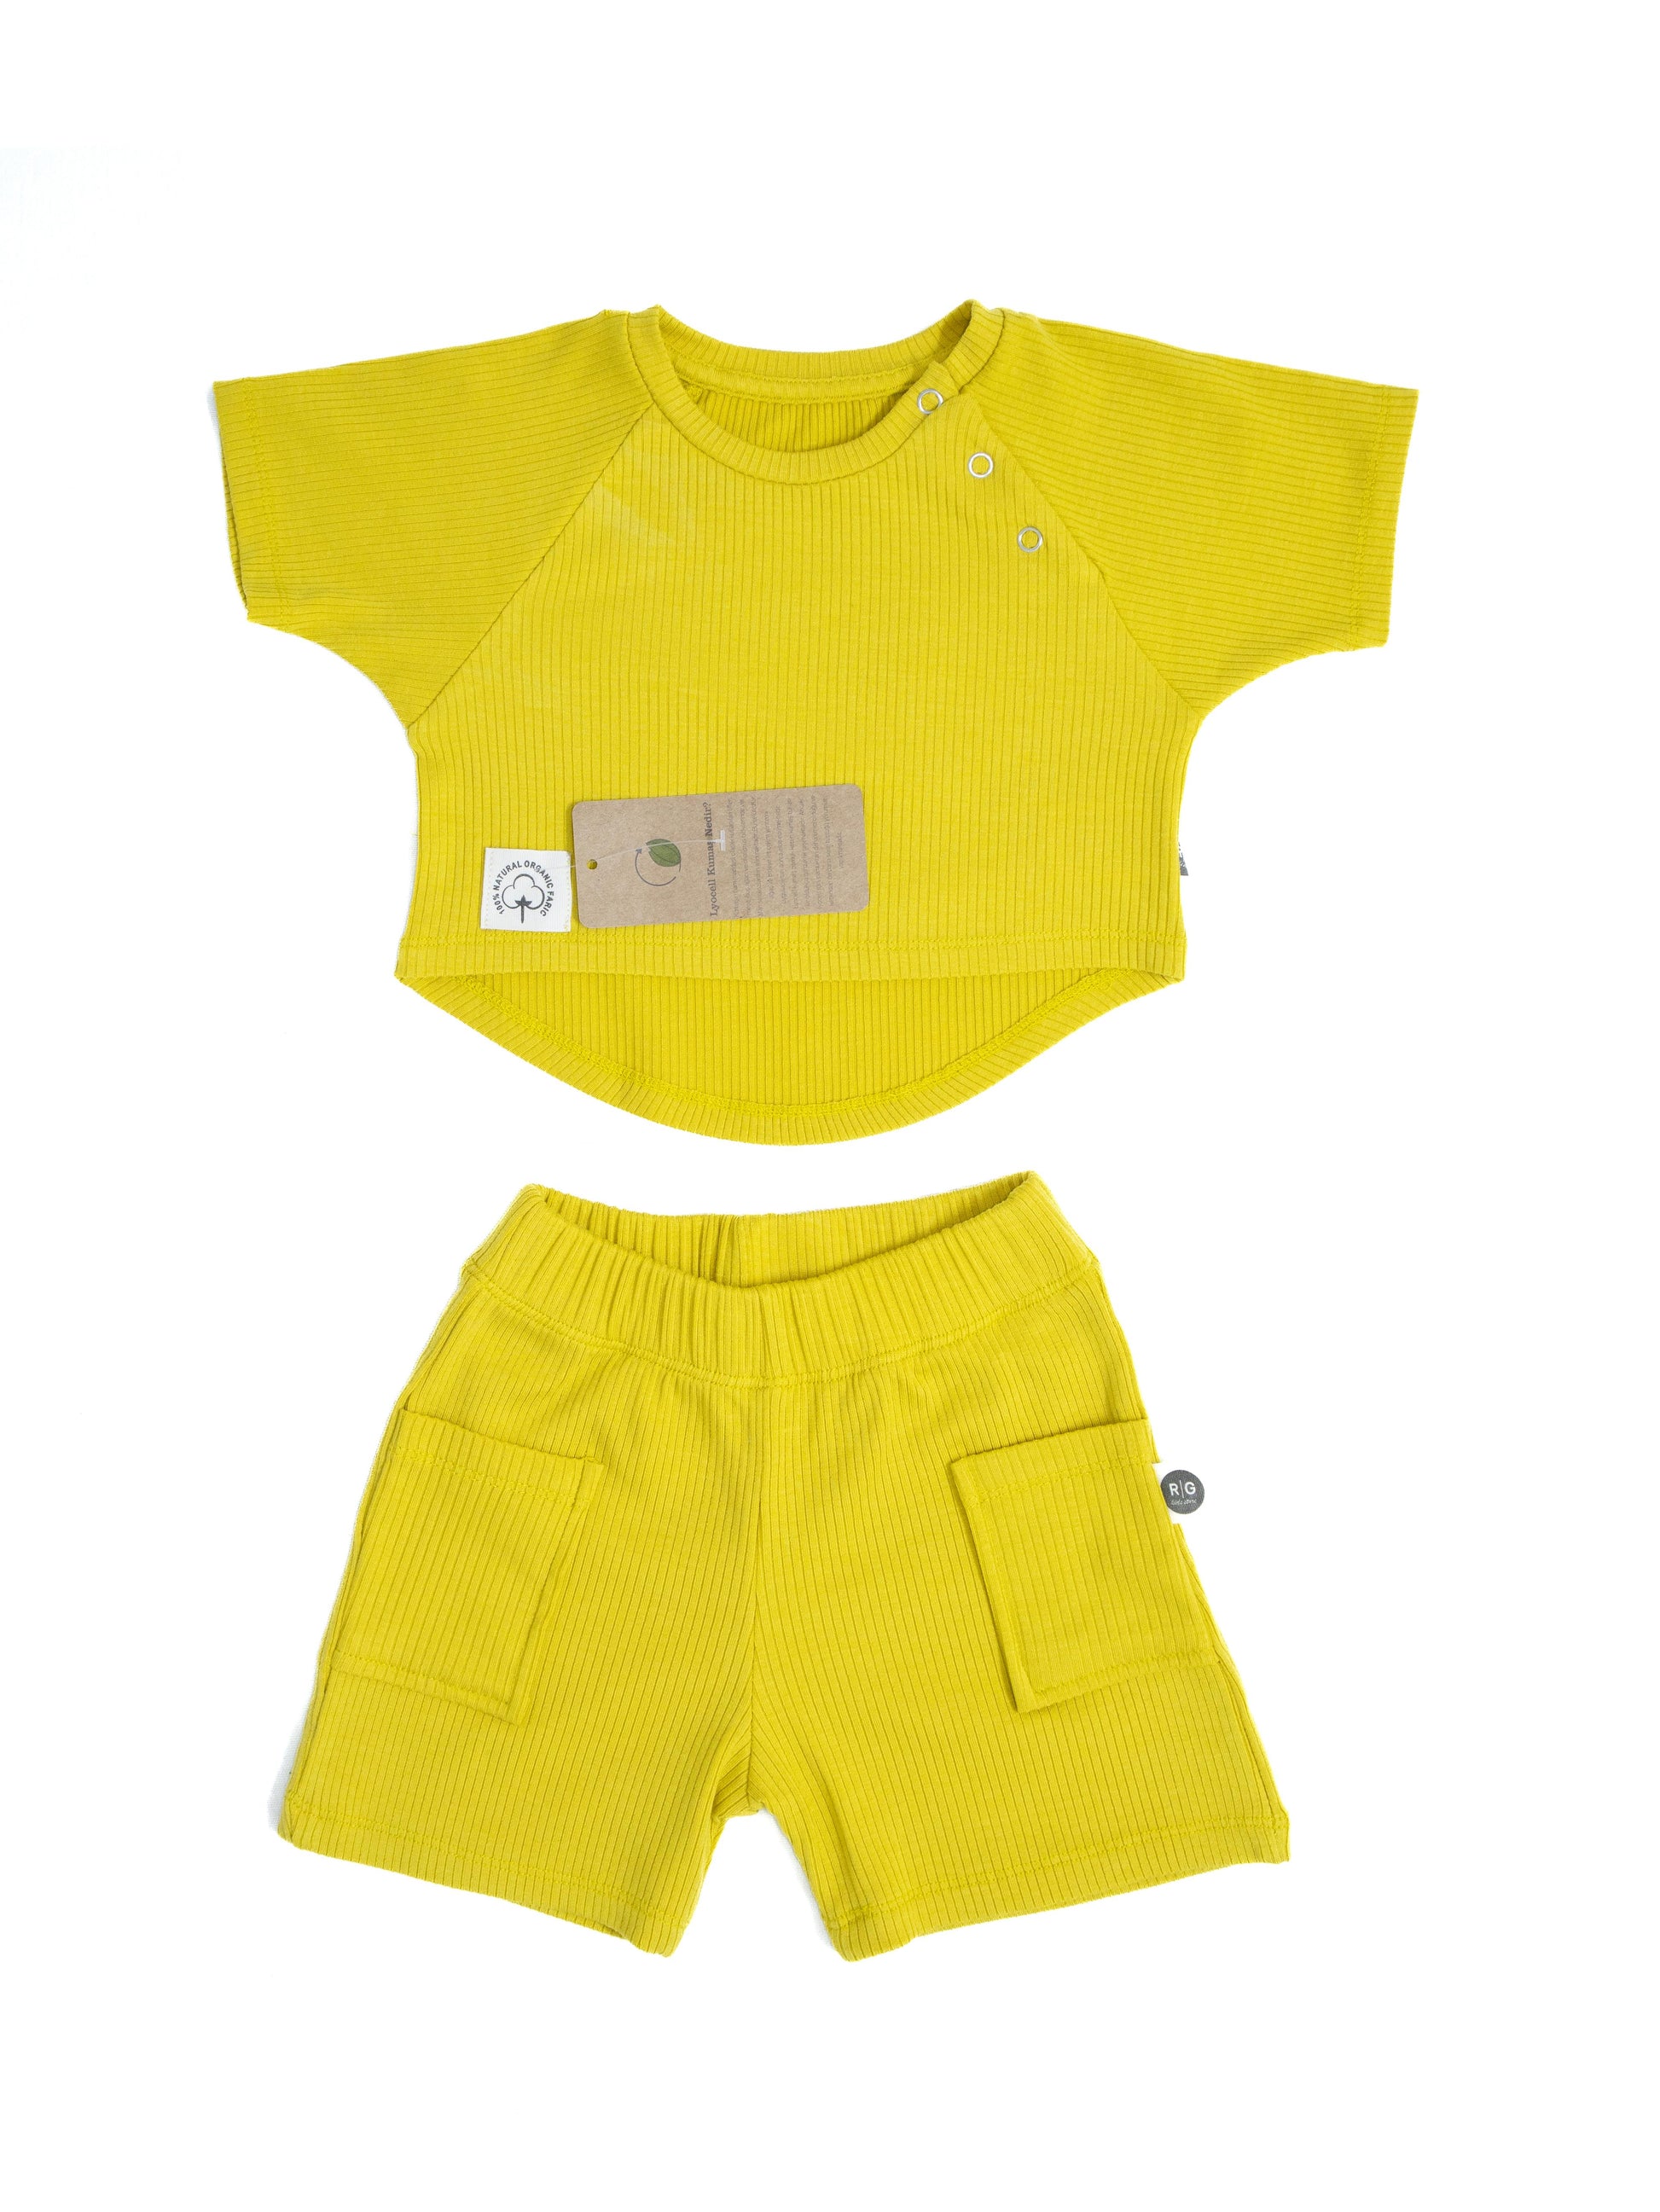 Unisex Baby 100% Lyocell Natural Fabric T-Shirt-Shorts Set